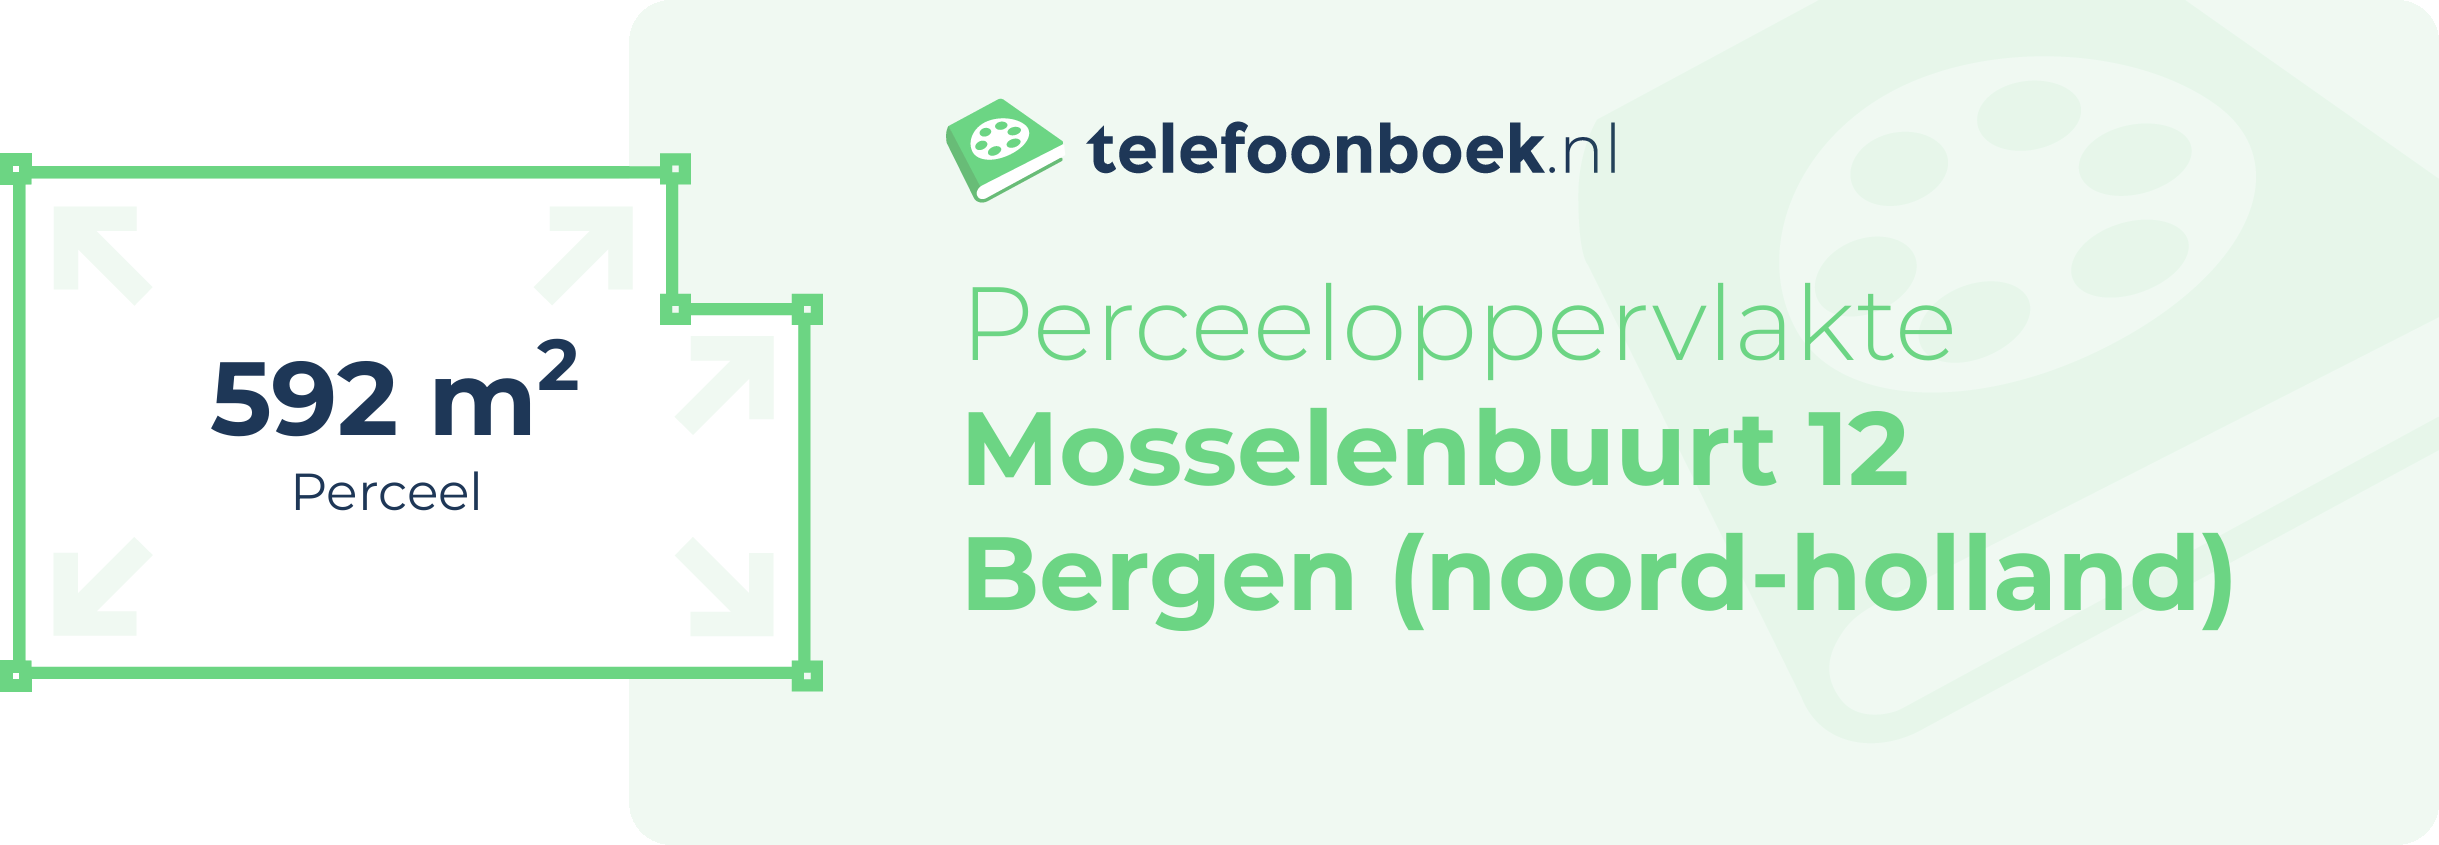 Perceeloppervlakte Mosselenbuurt 12 Bergen (Noord-Holland)